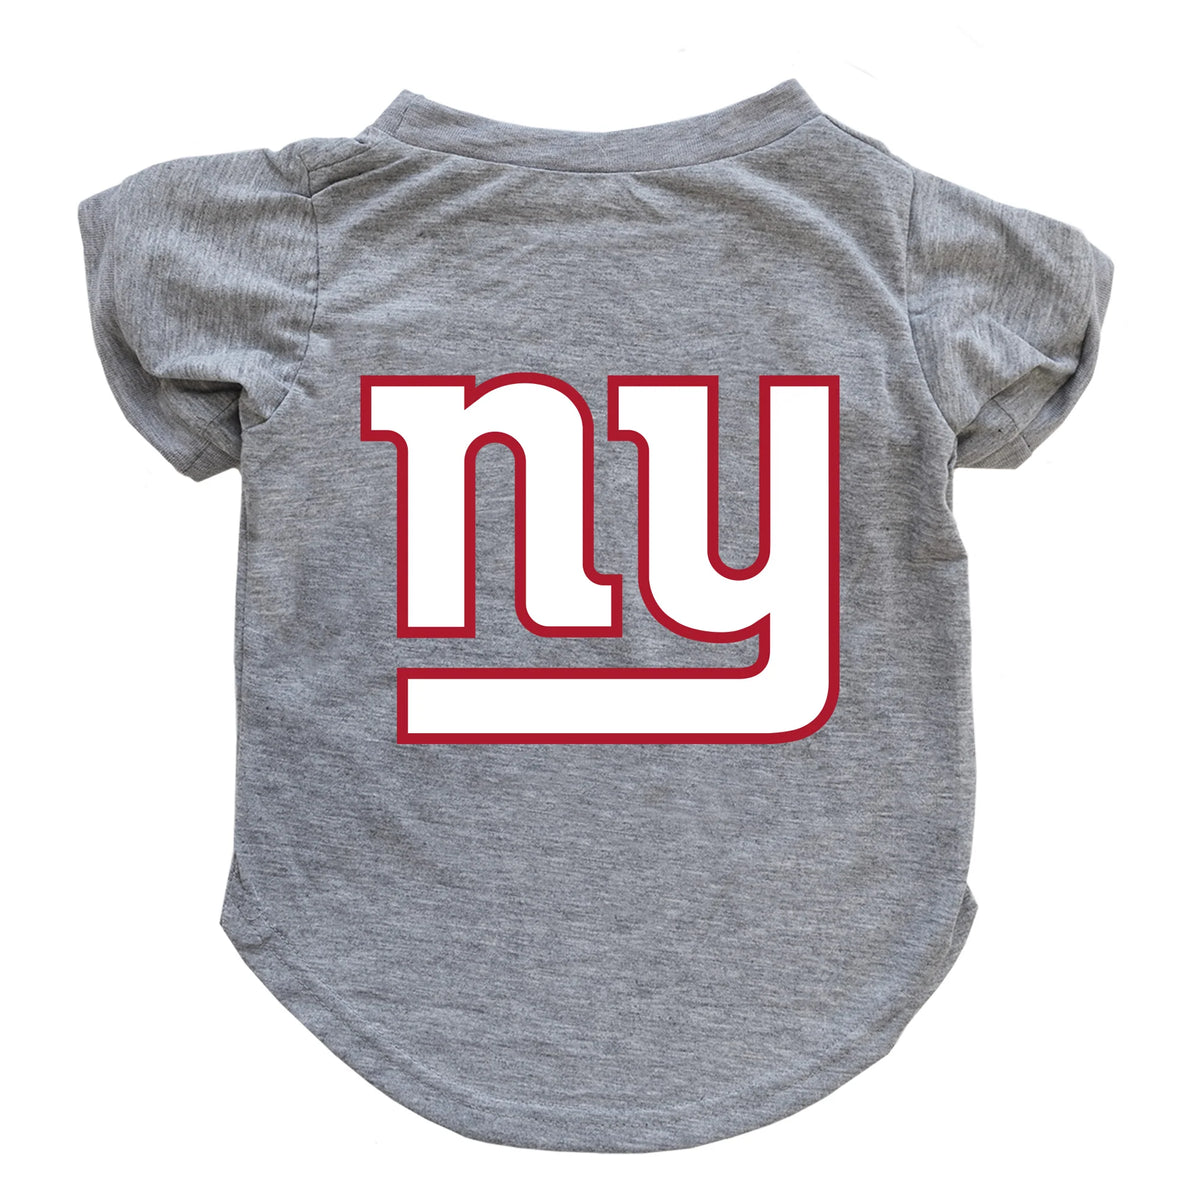 New York Giants Tee Shirt